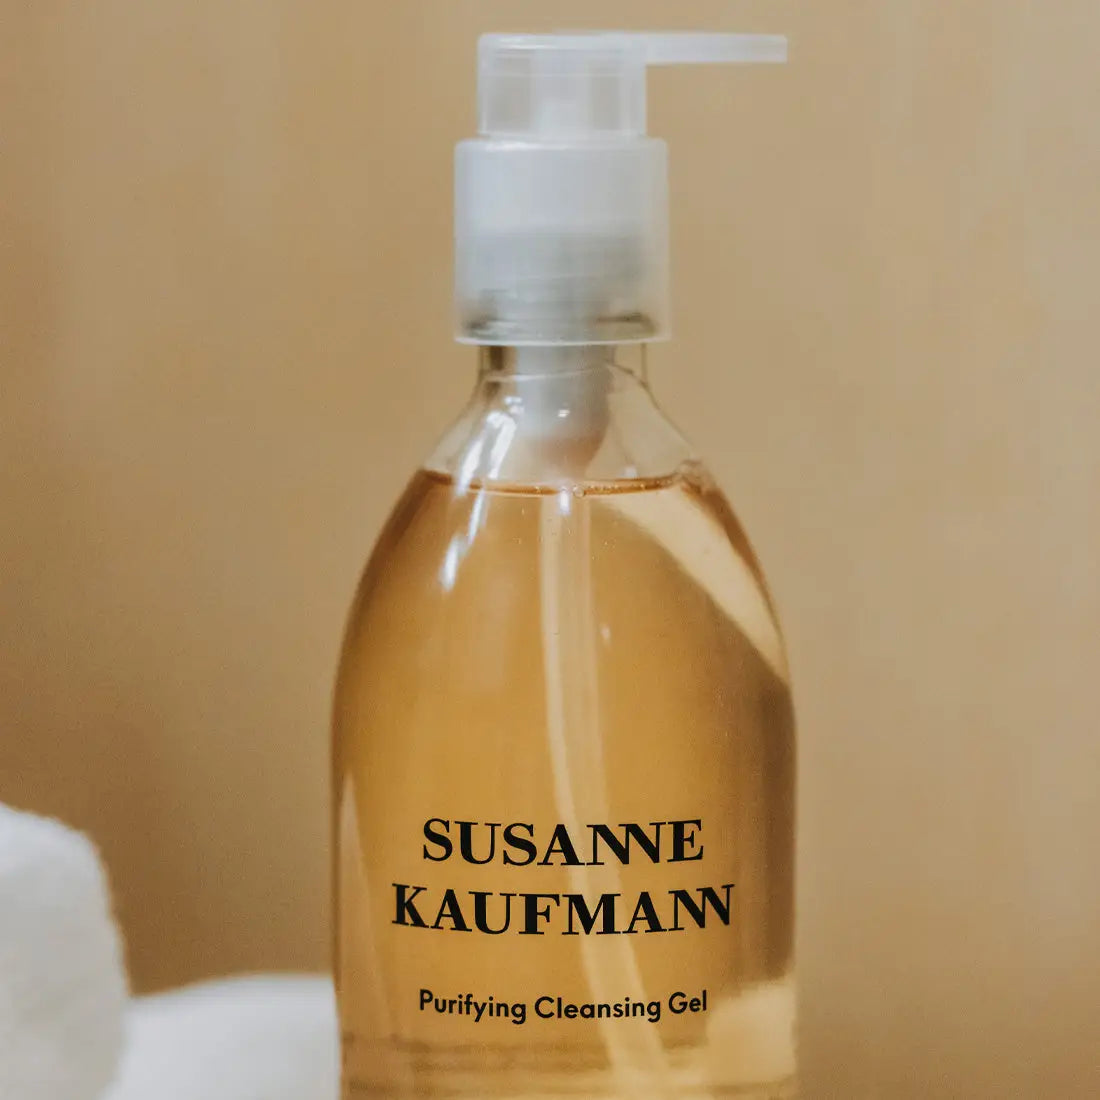 Susanne Kaufmann Purifying Cleansing Gel 250ml - Free 